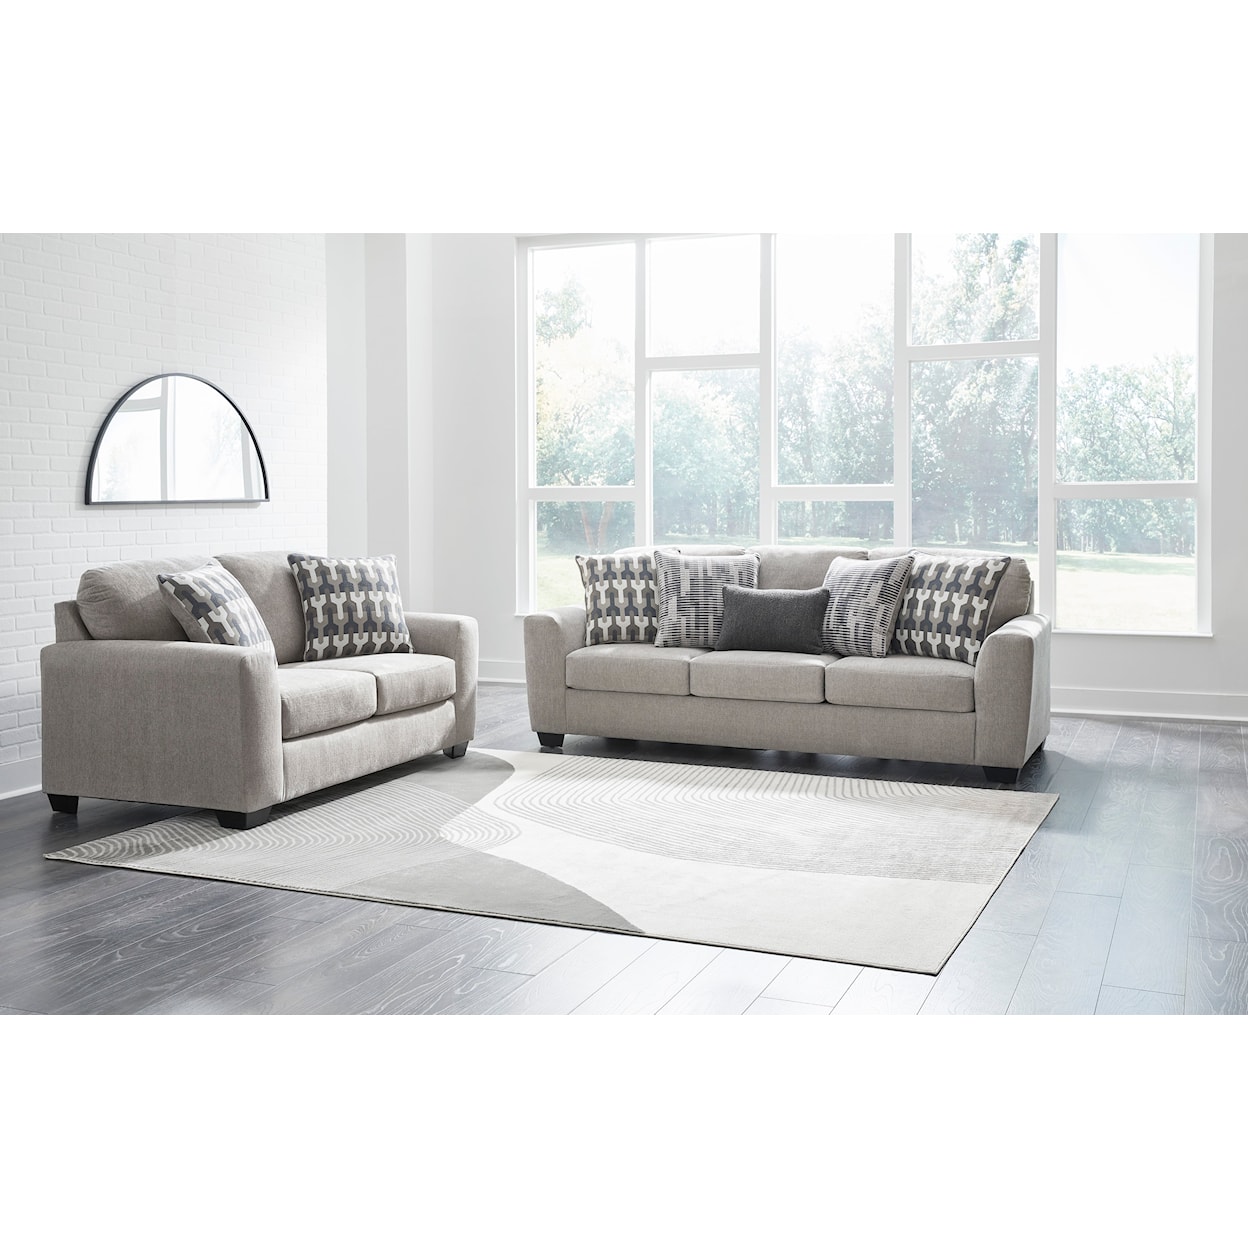 Ashley Furniture Signature Design Avenal Park Living Room Set